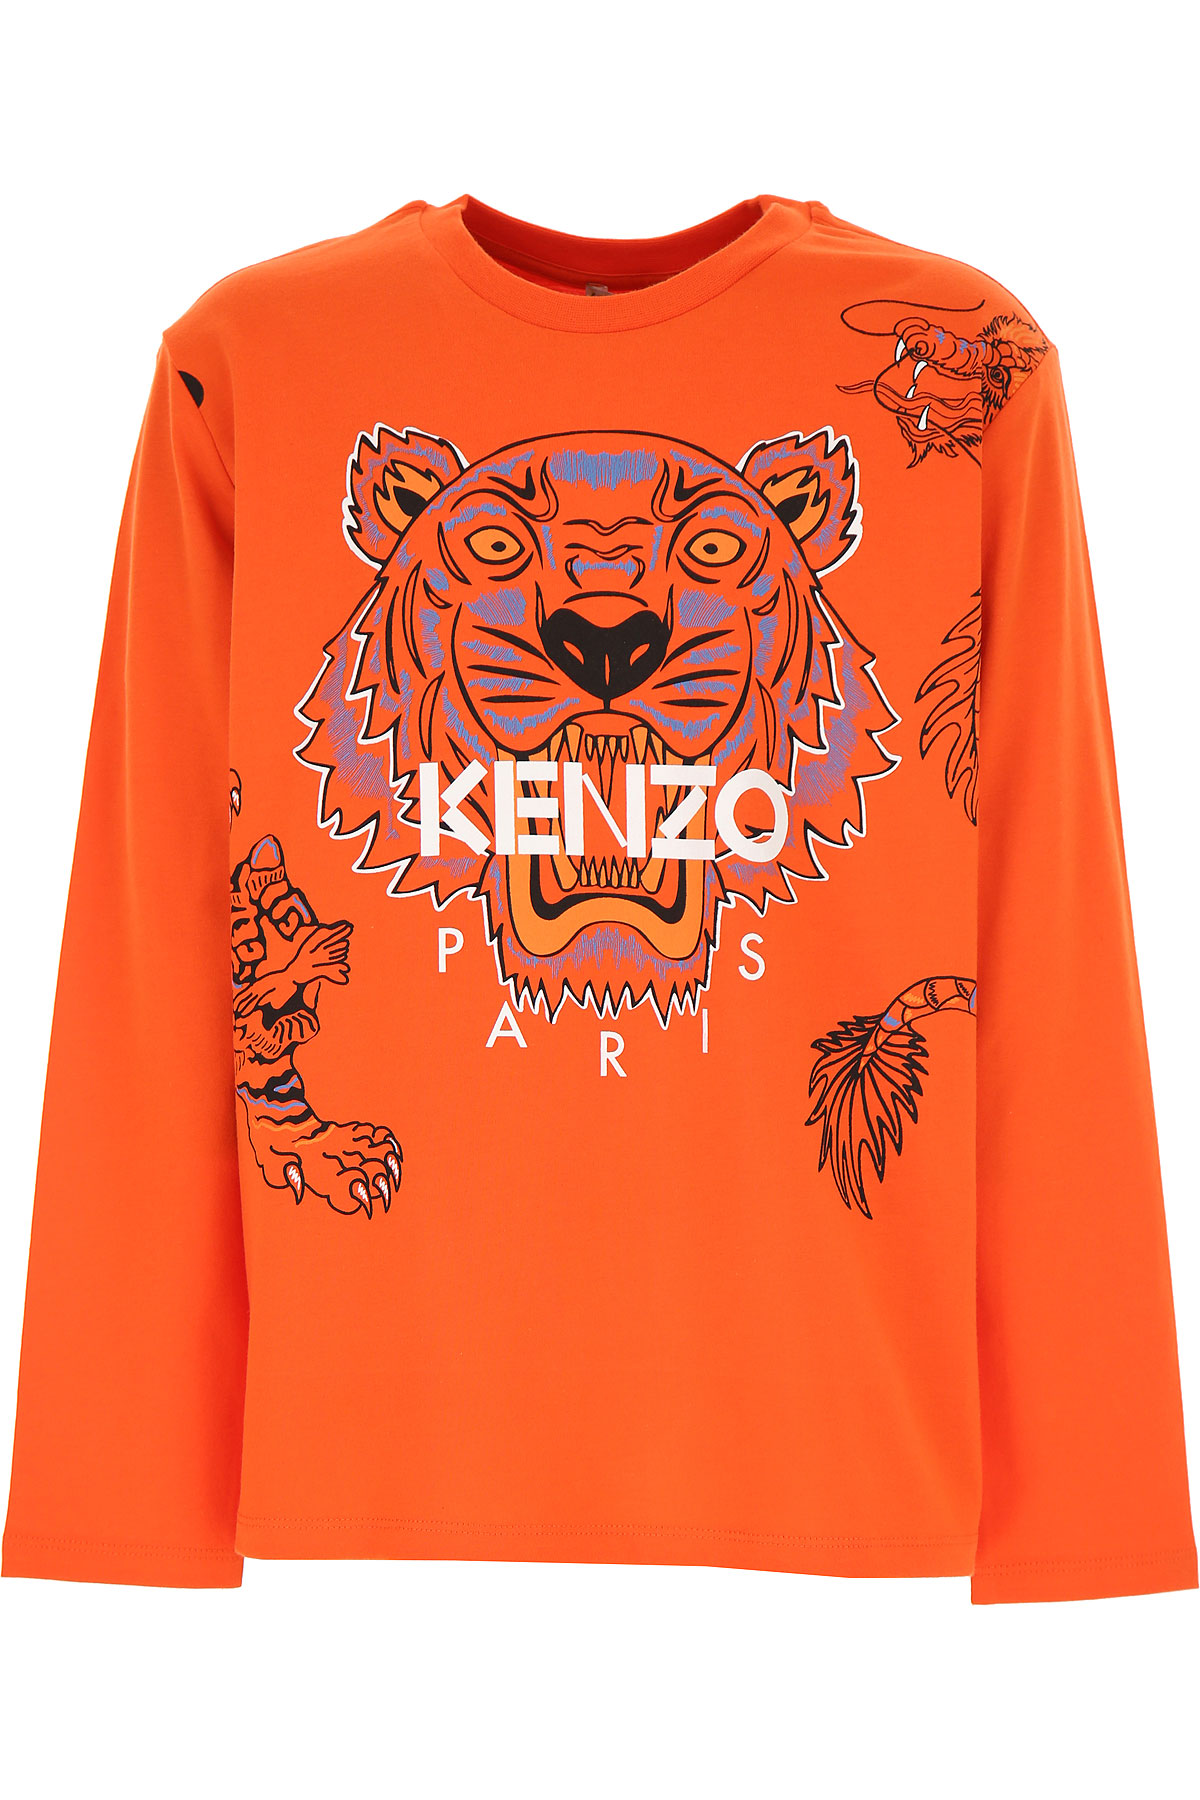 Kenzo Kinder T-Shirt für Jungen Günstig im Sale, Orange, Baumwolle, 2017, 12Y 14Y 2Y 3Y 4Y 6Y 8Y